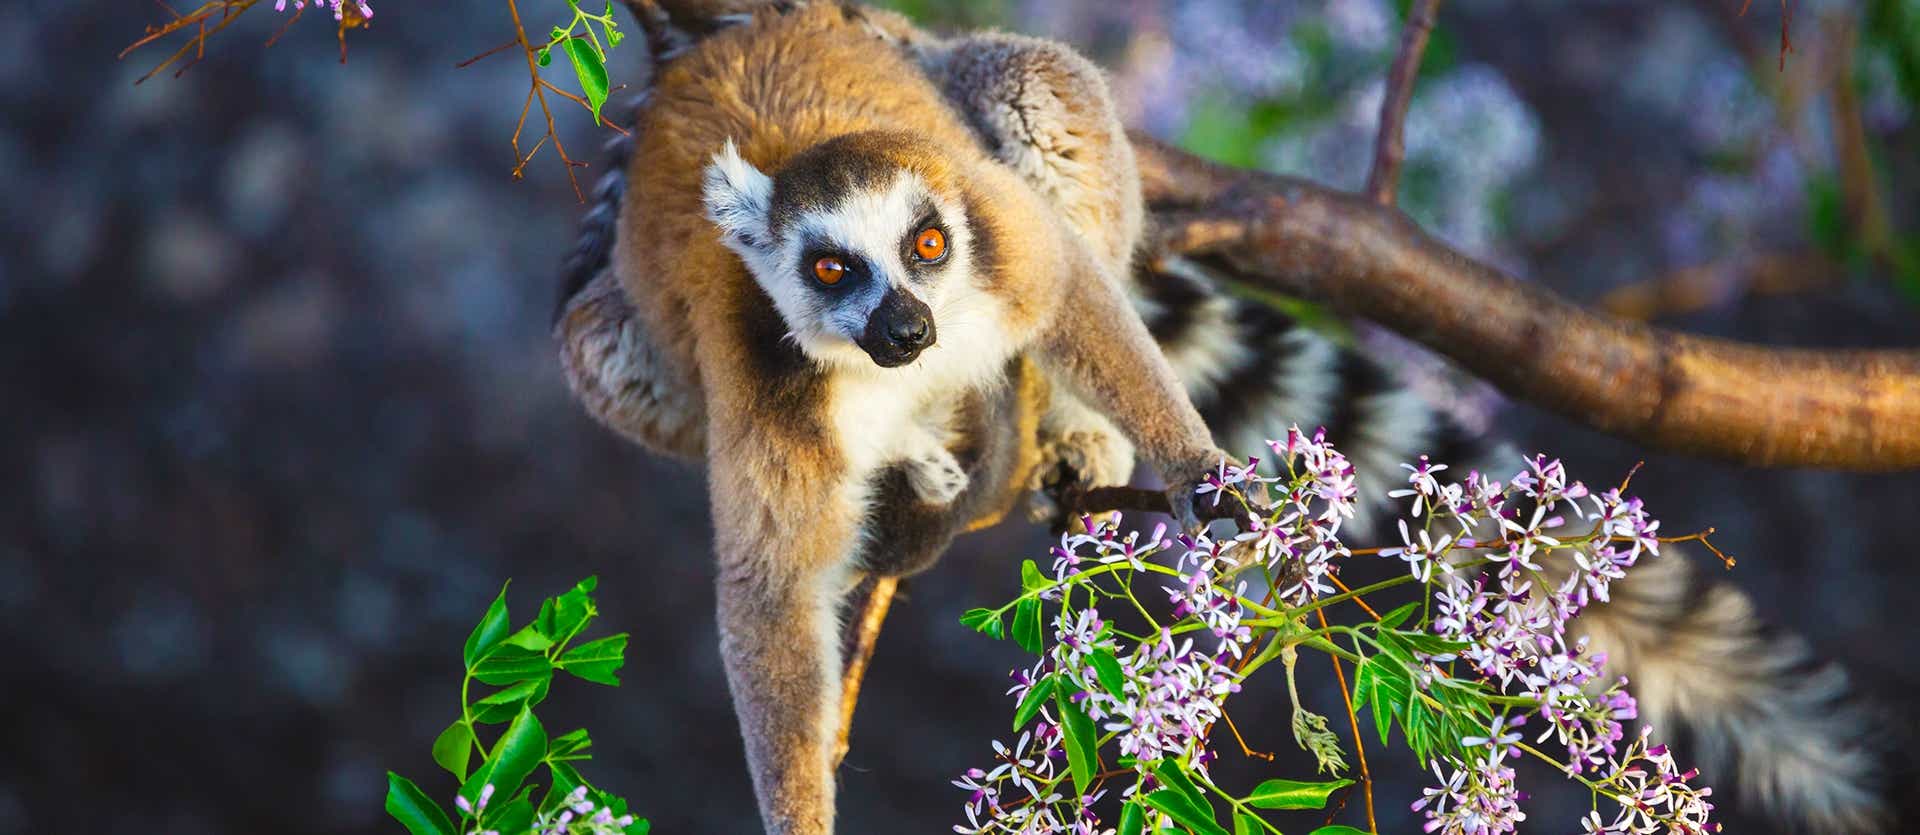 Ring-Tailed Lemur <span class="iconos separador"></span> Anja Reserve <span class="iconos separador"></span> Madagascar